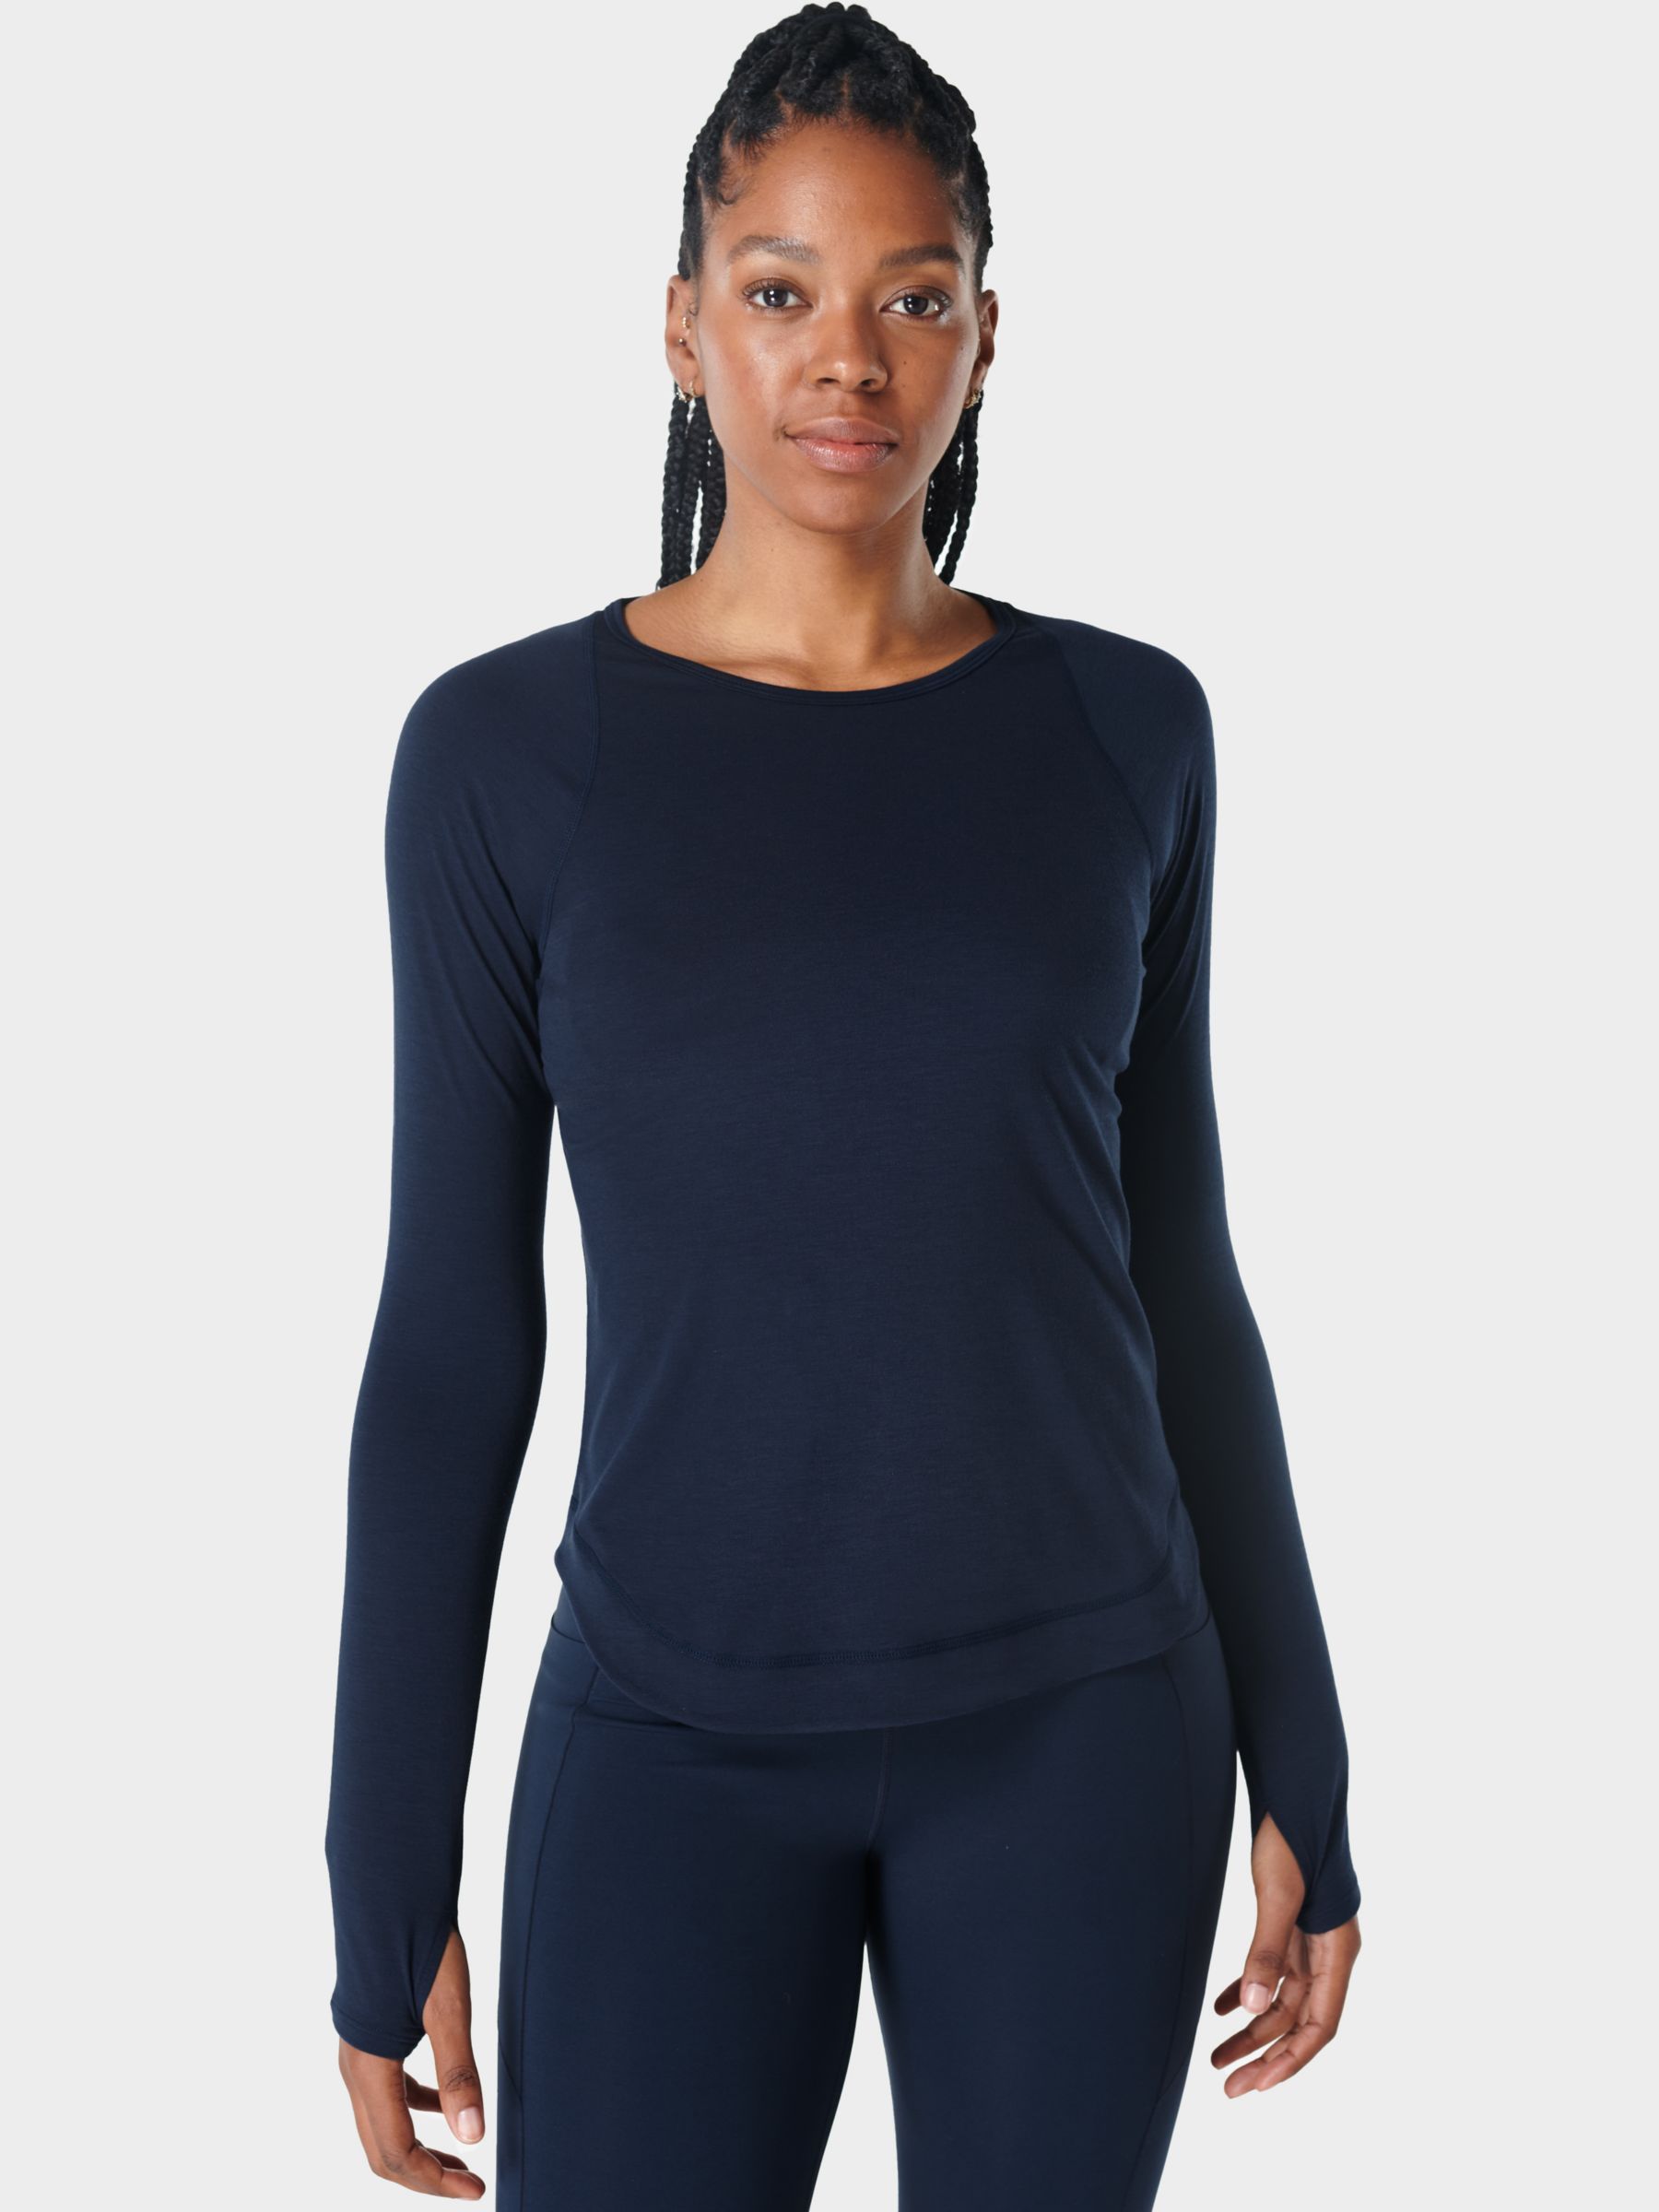 Breathe Easy Running Long Sleeve Top - Navy Blue, Women's Base Layers & Long  Sleeve Tops